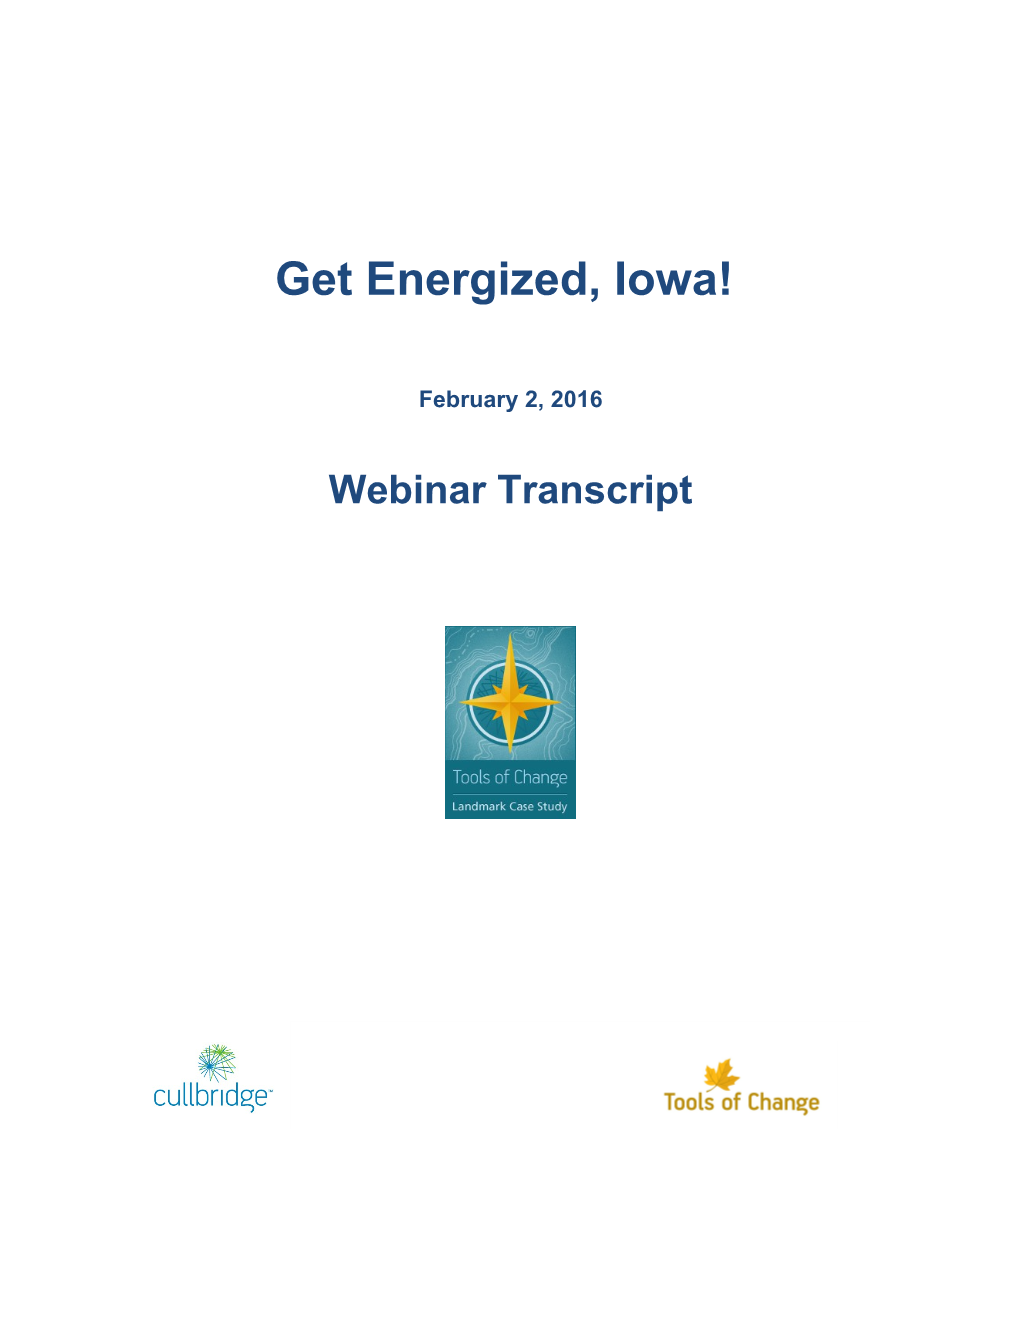 Webinar: Get Energized, Iowa! 1